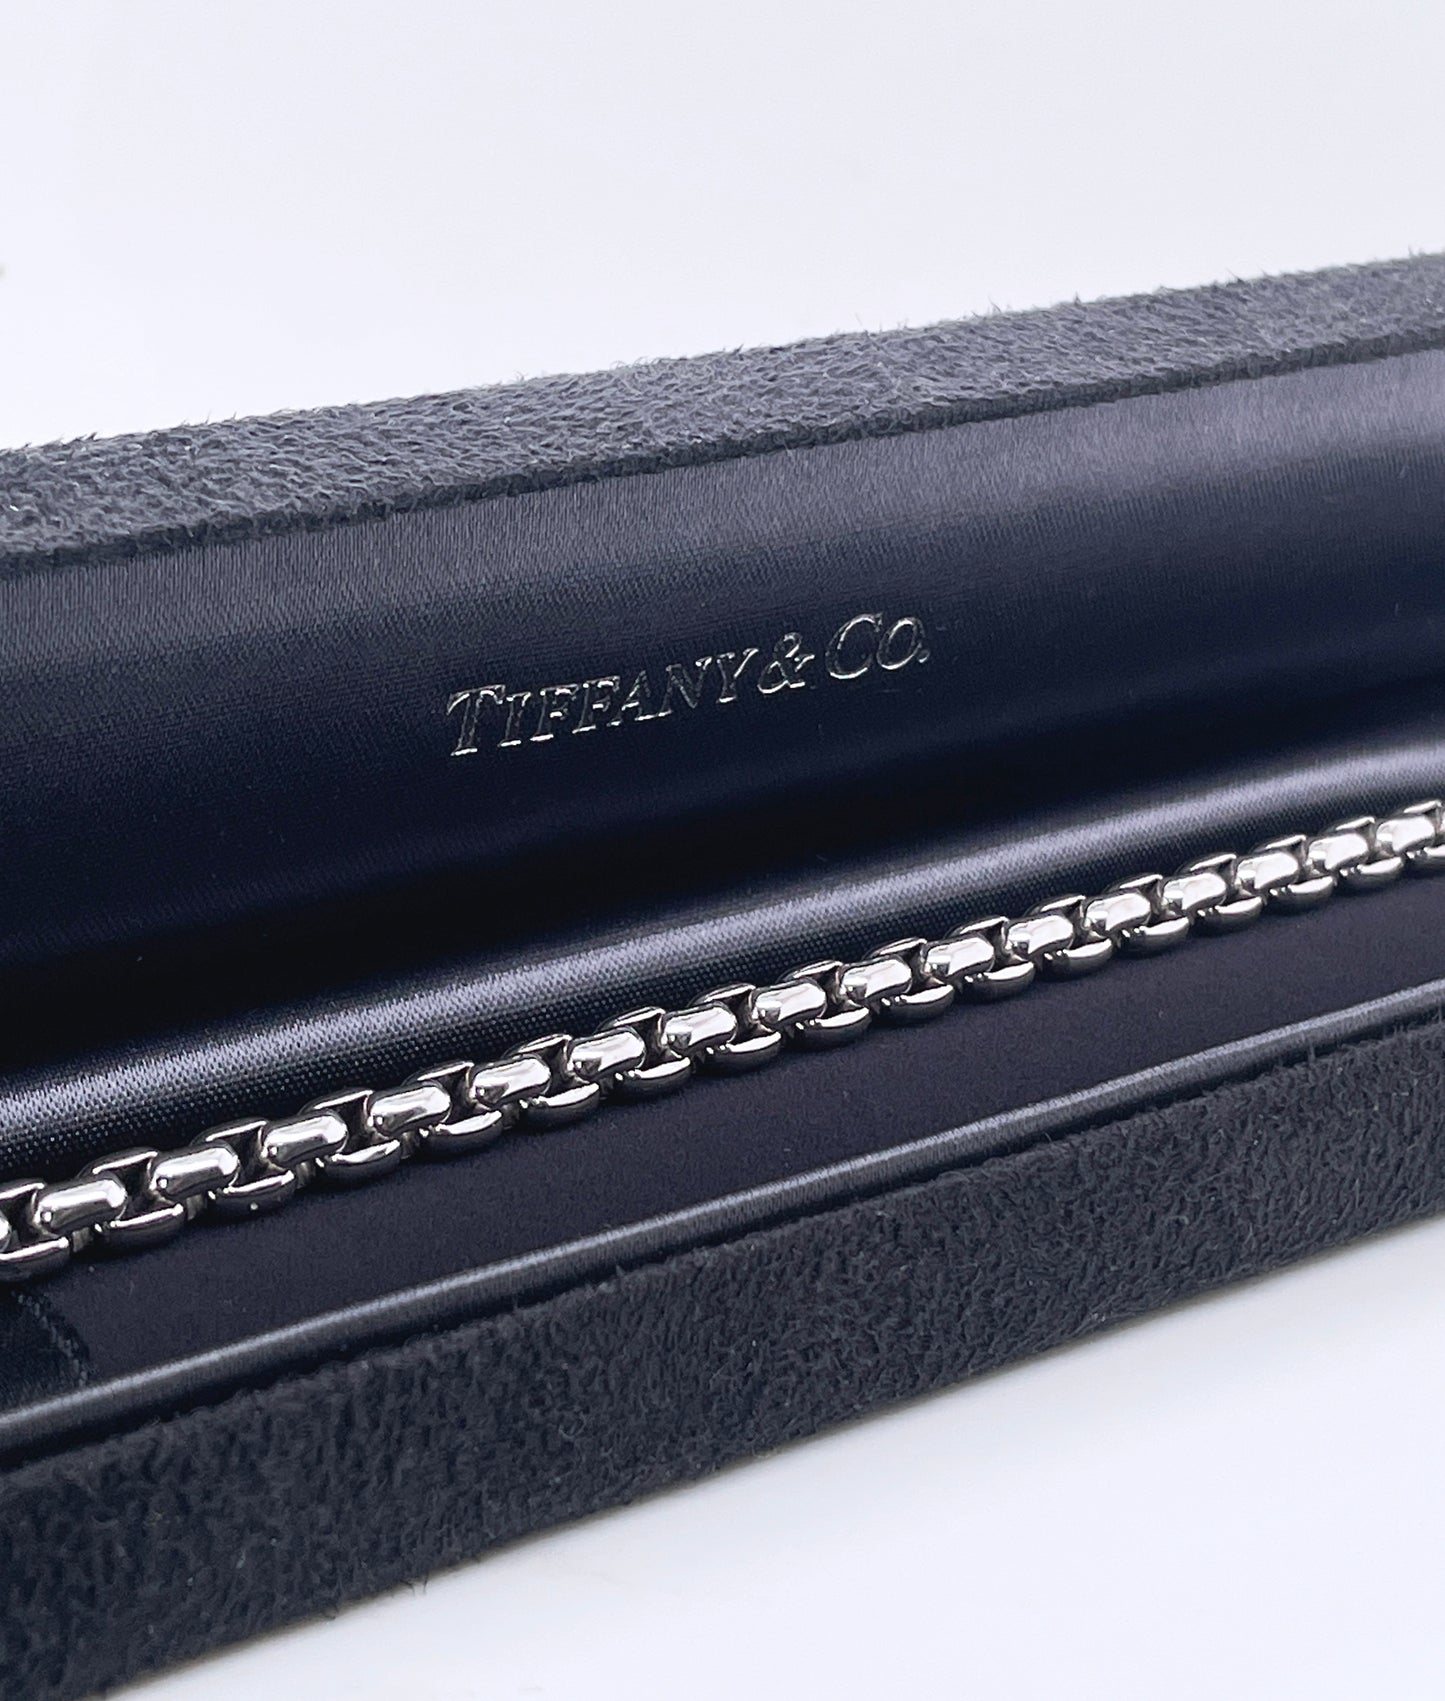 Tiffany & Co. 18 Carat White Gold Classic Box Chain Link Bracelet